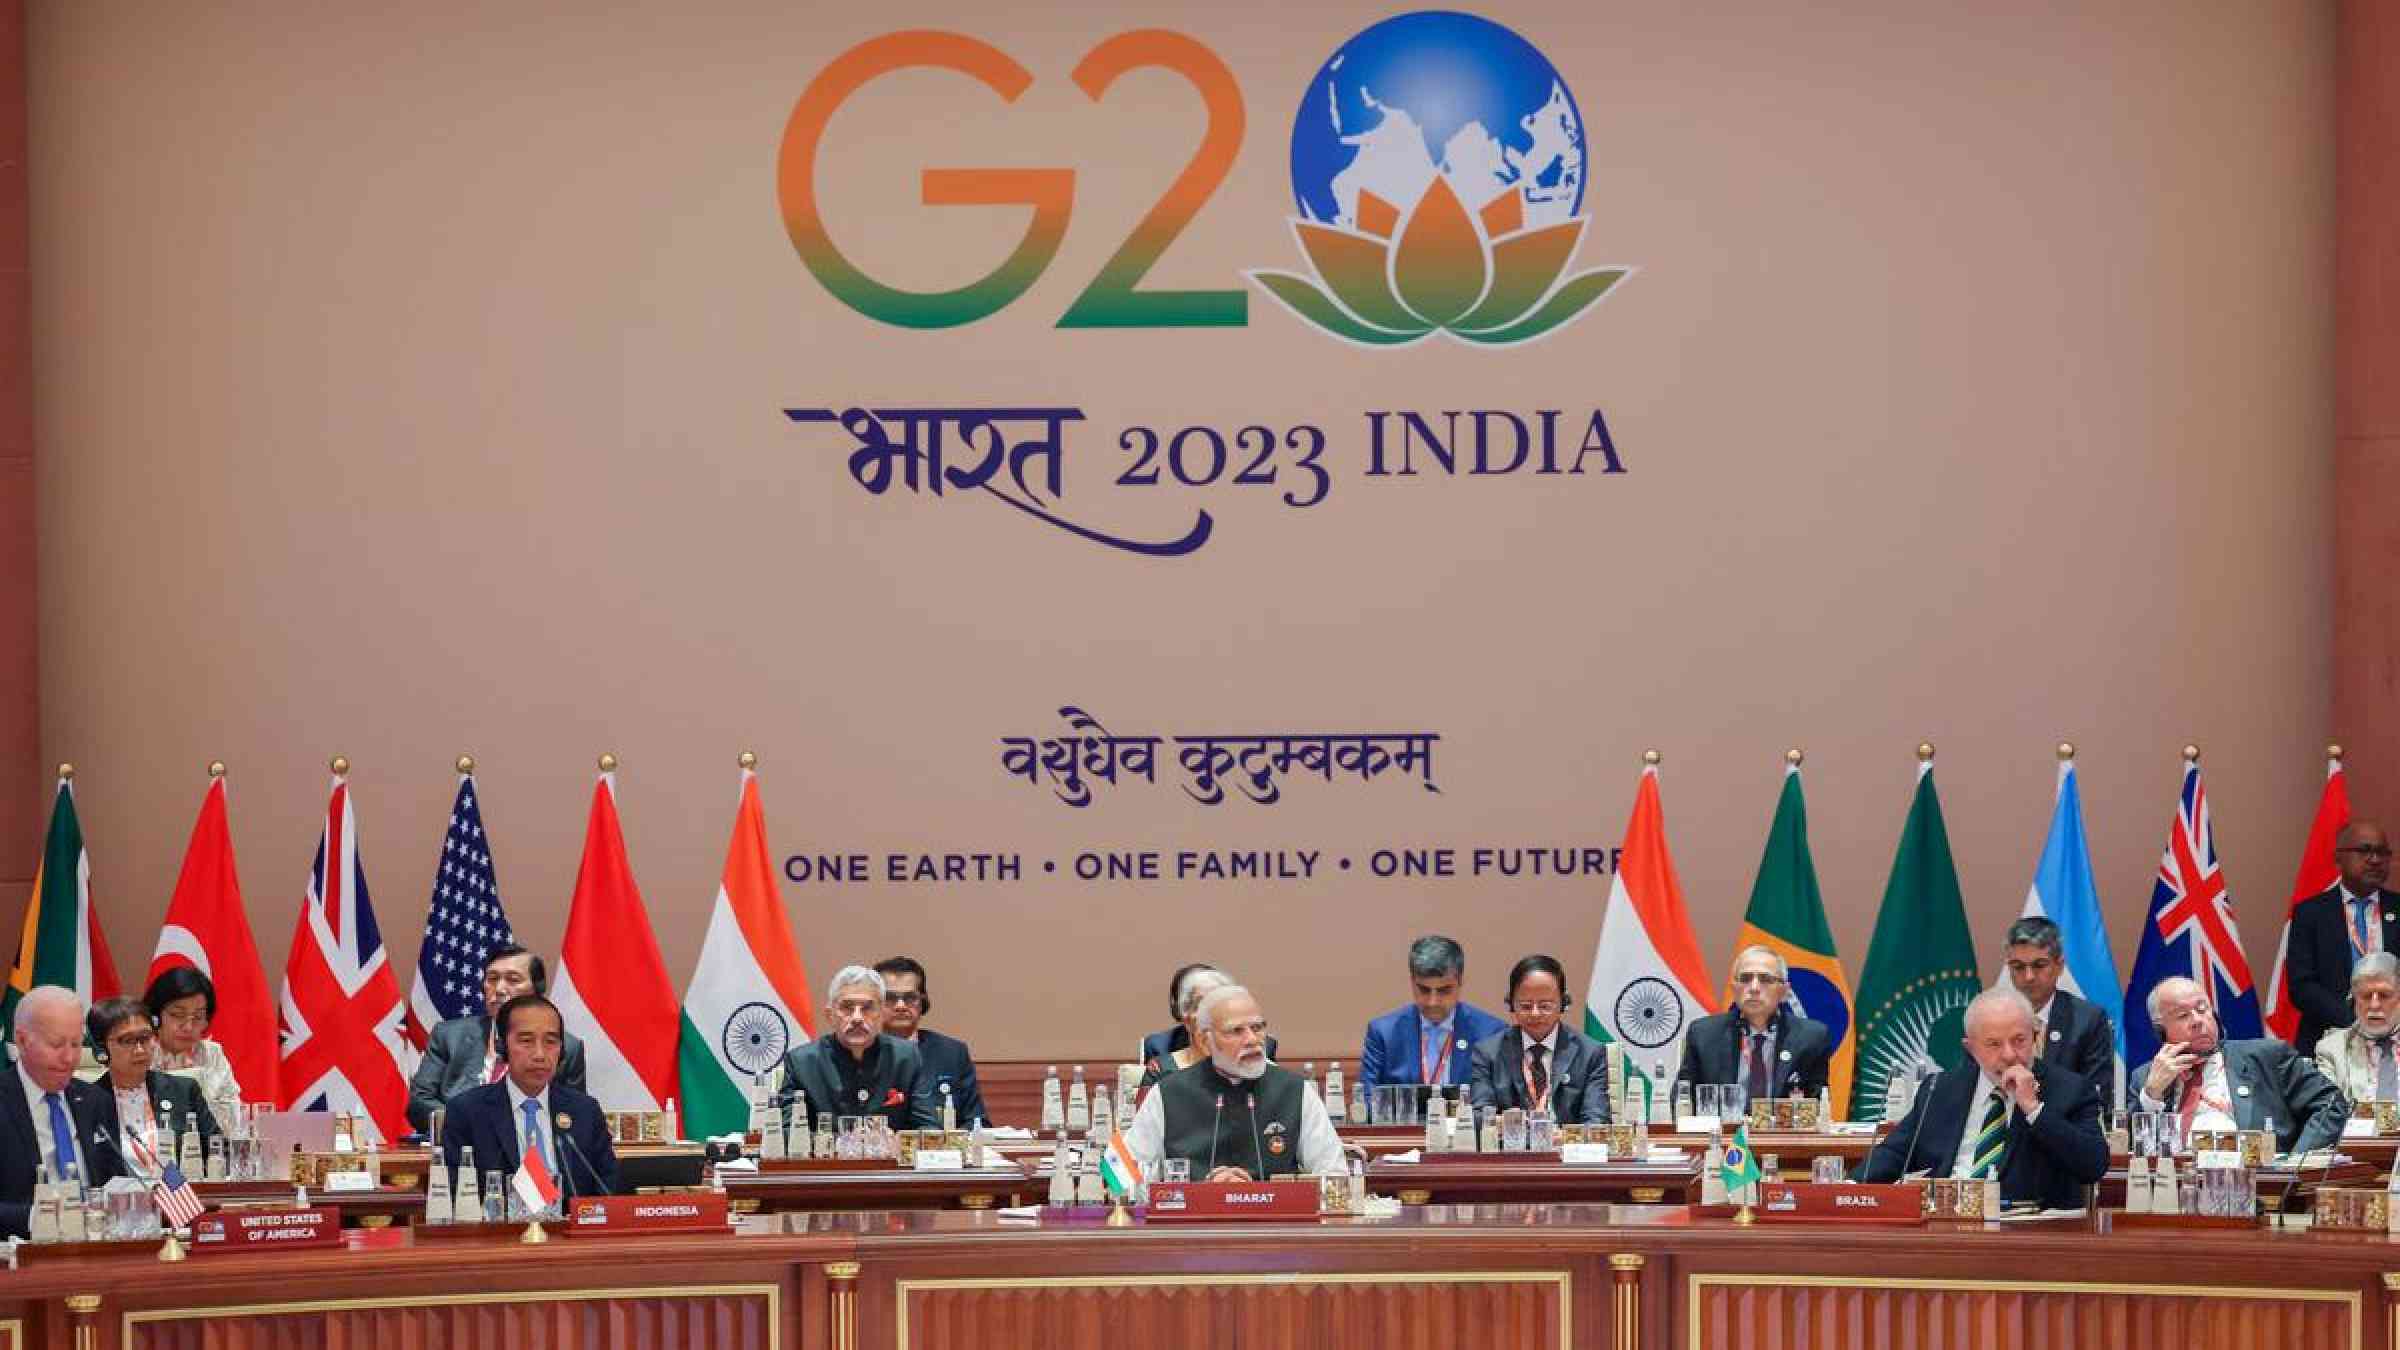 G20 high-level summit, September 2023